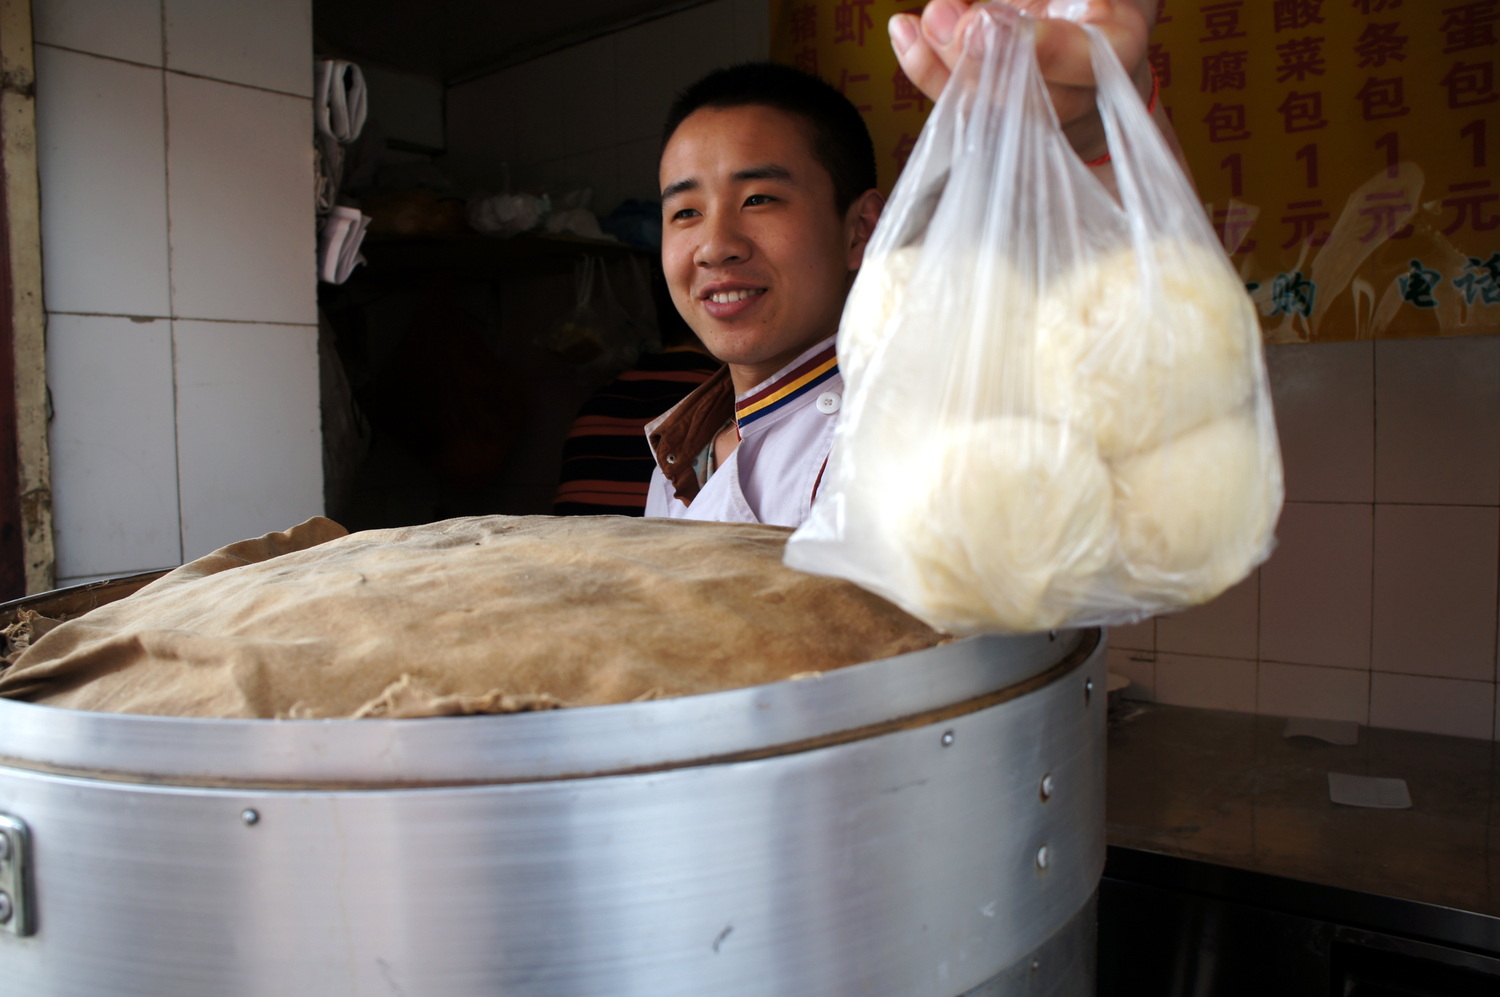 Buying some baozi - Chinese dumplings